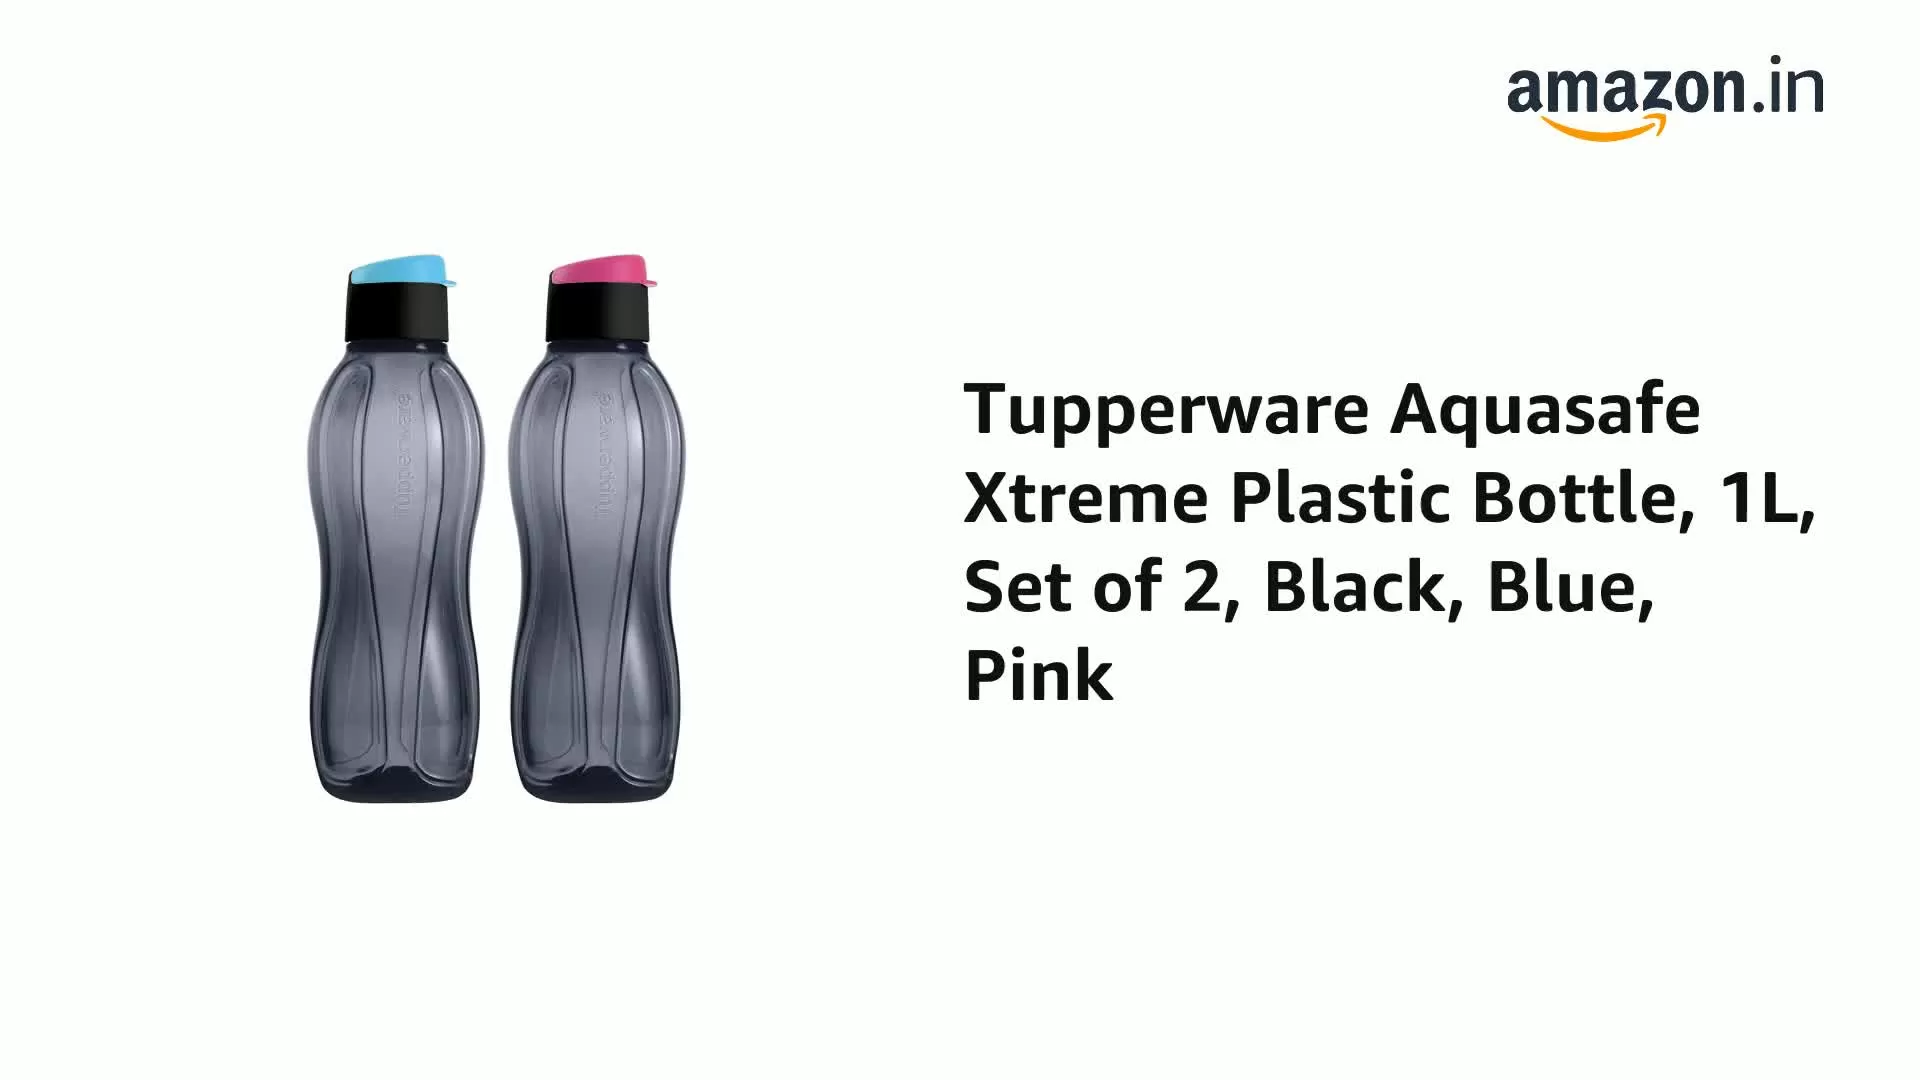 Aquasafe Xtreme Plastic Bottle 1L Set of 2 Black Blue Pink, 2 image